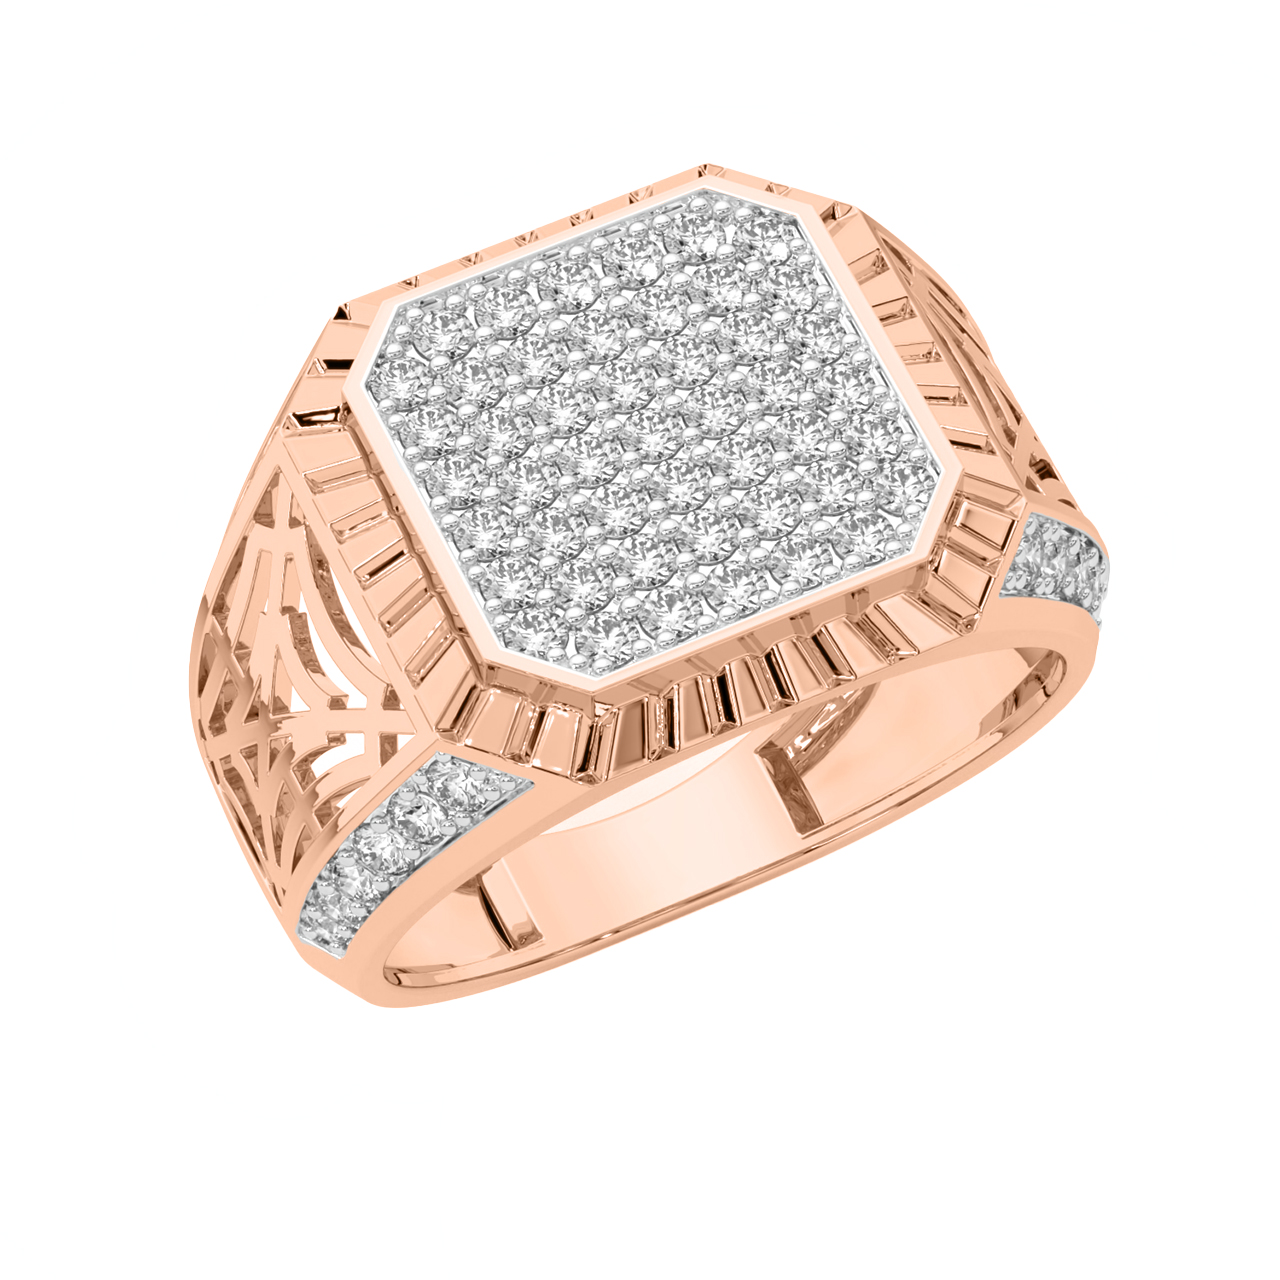 Octagon Design Ring For Men